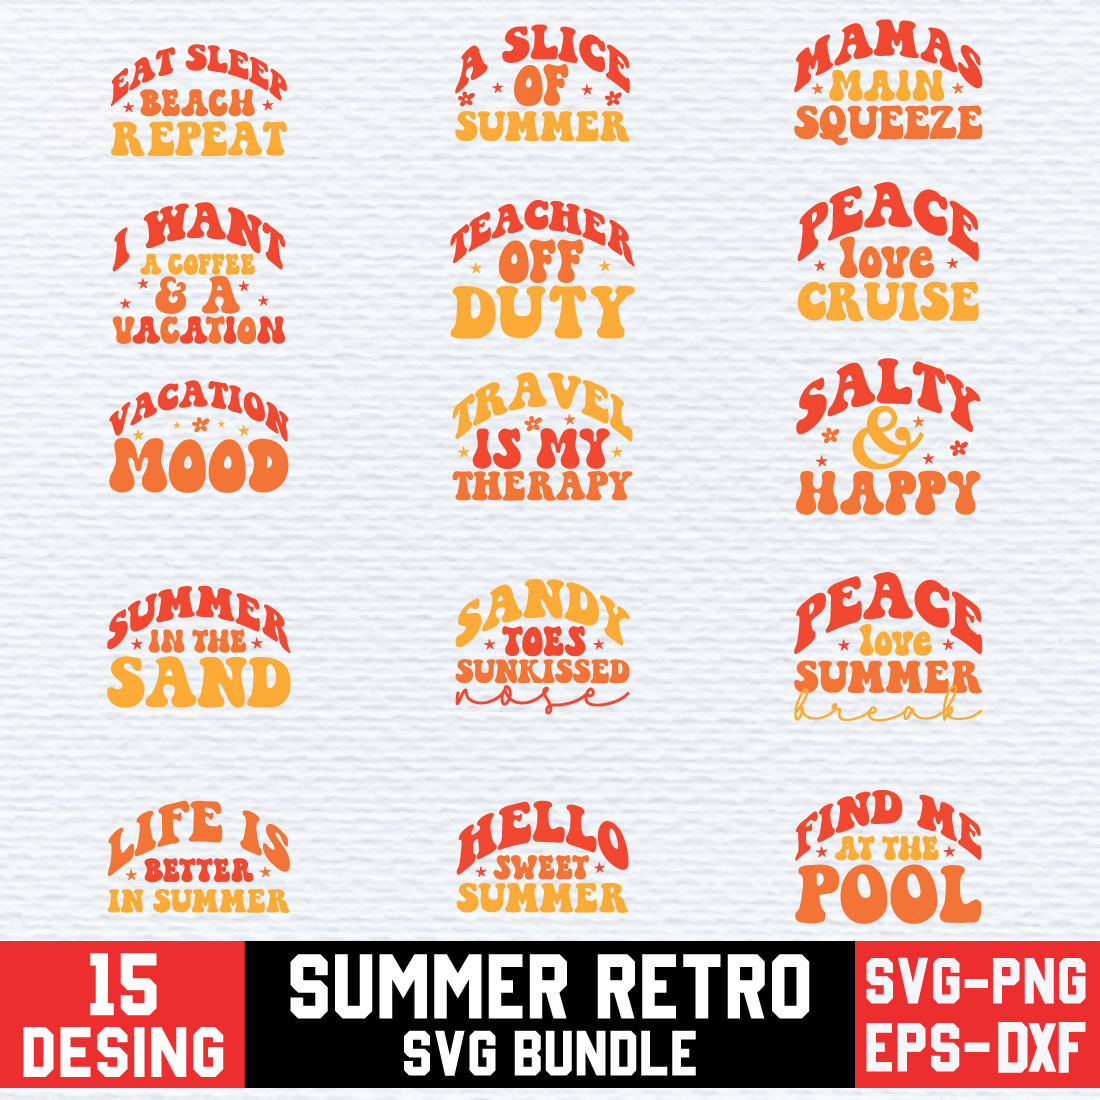 Summer Retro Svg Bundle preview image.